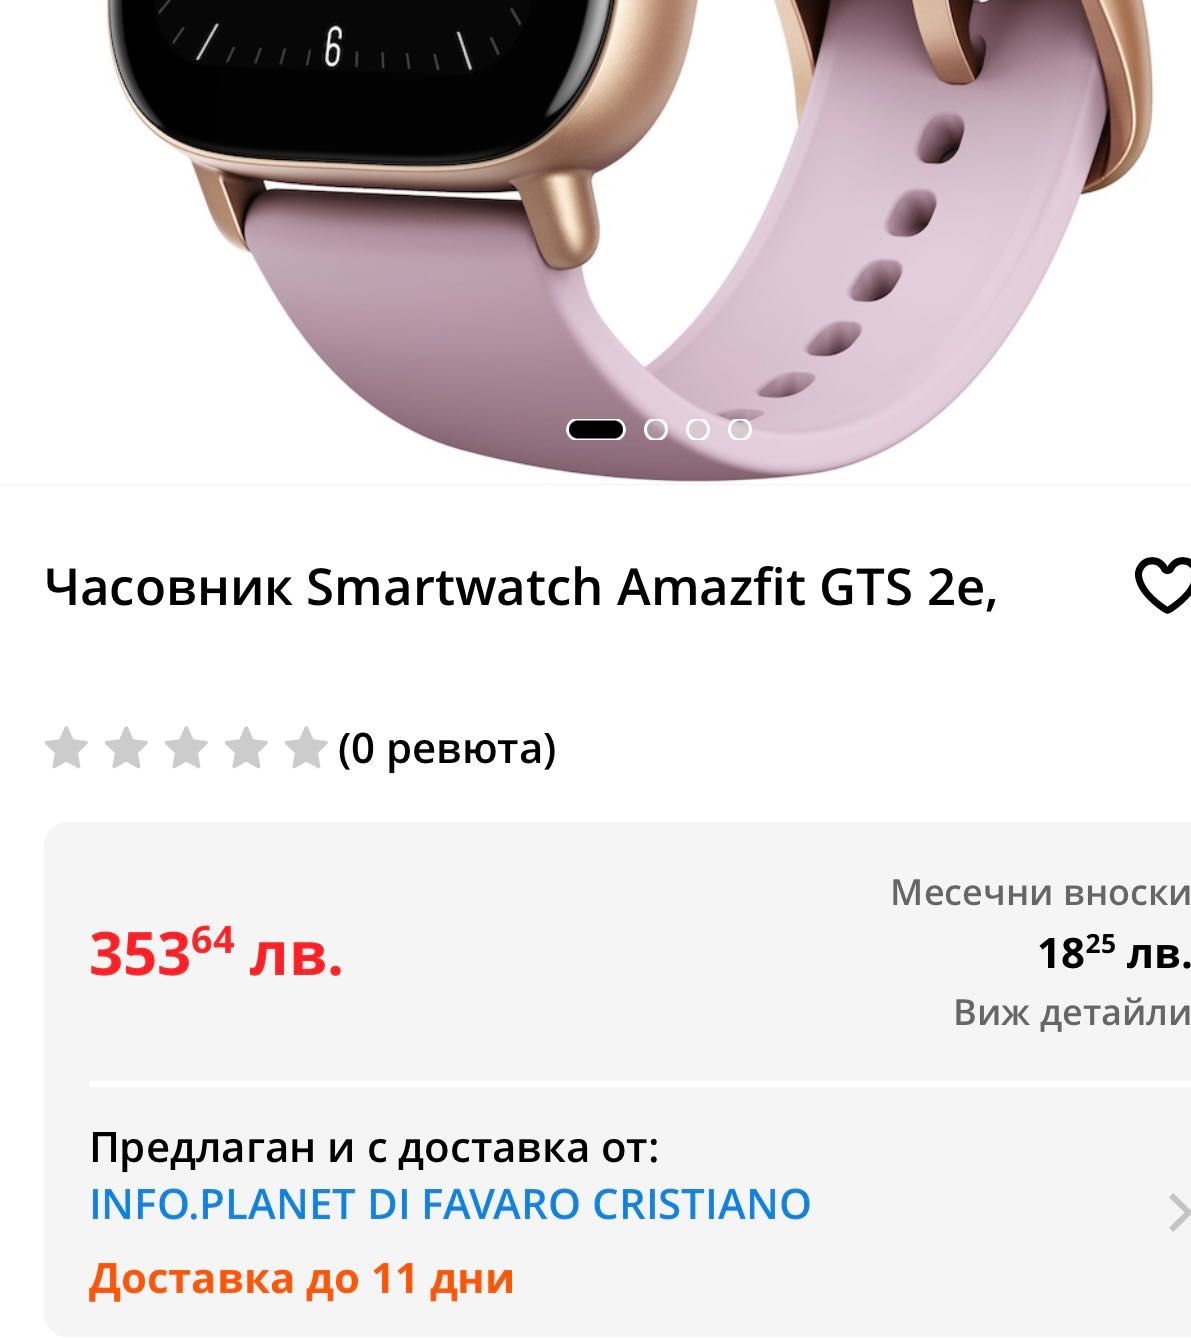 Часовник Smartwatch Amazfit GTS 2e